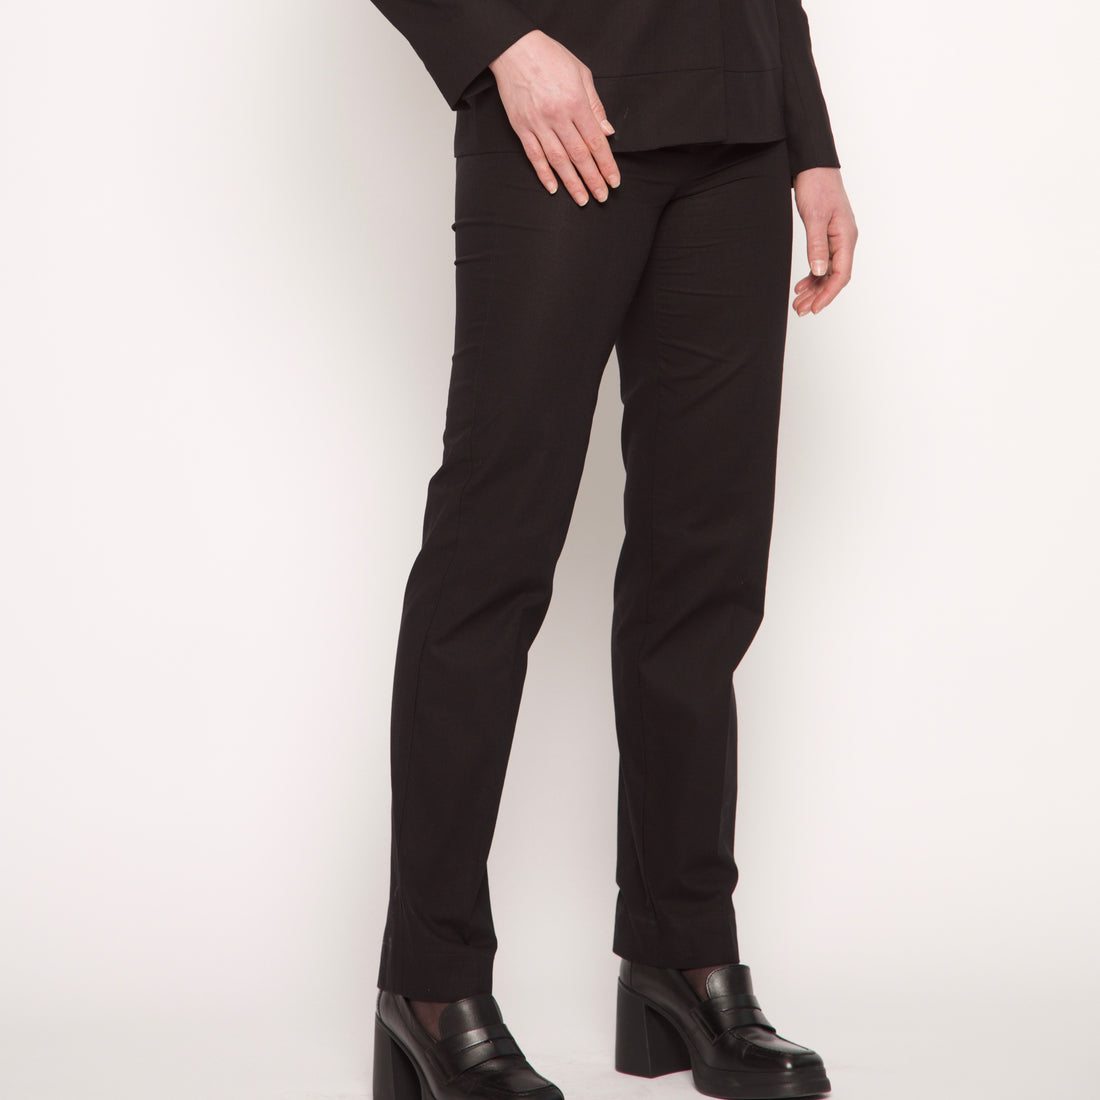 Pantalon tailleur droit noir -  Coton - NUYHENN